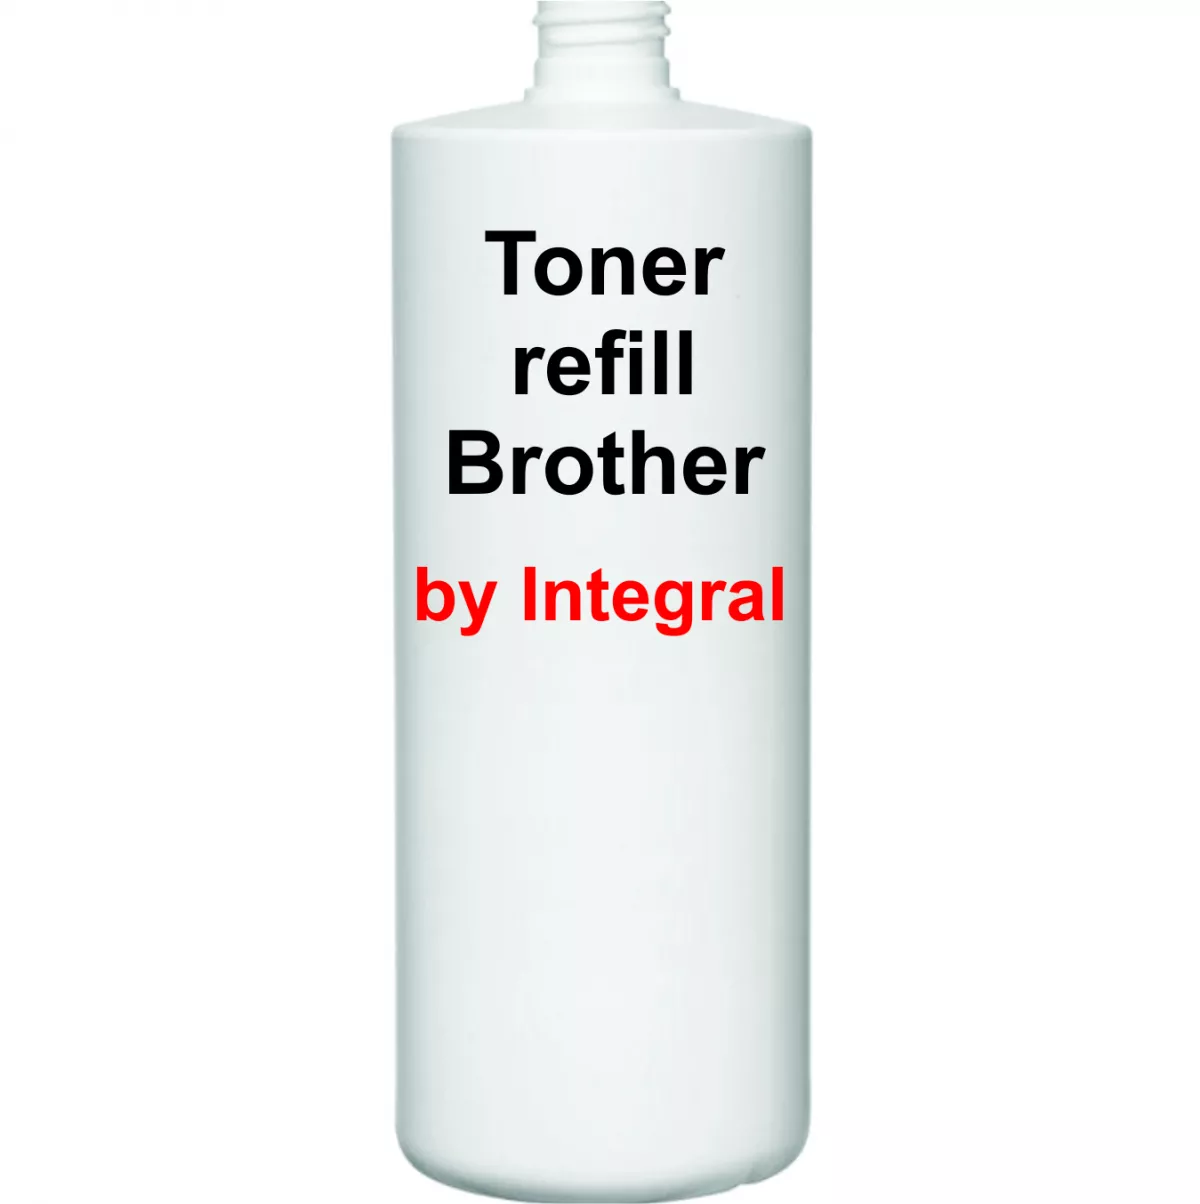 Toner refill cartus Brother TN2411 TN2421 500g, [],erefill.ro